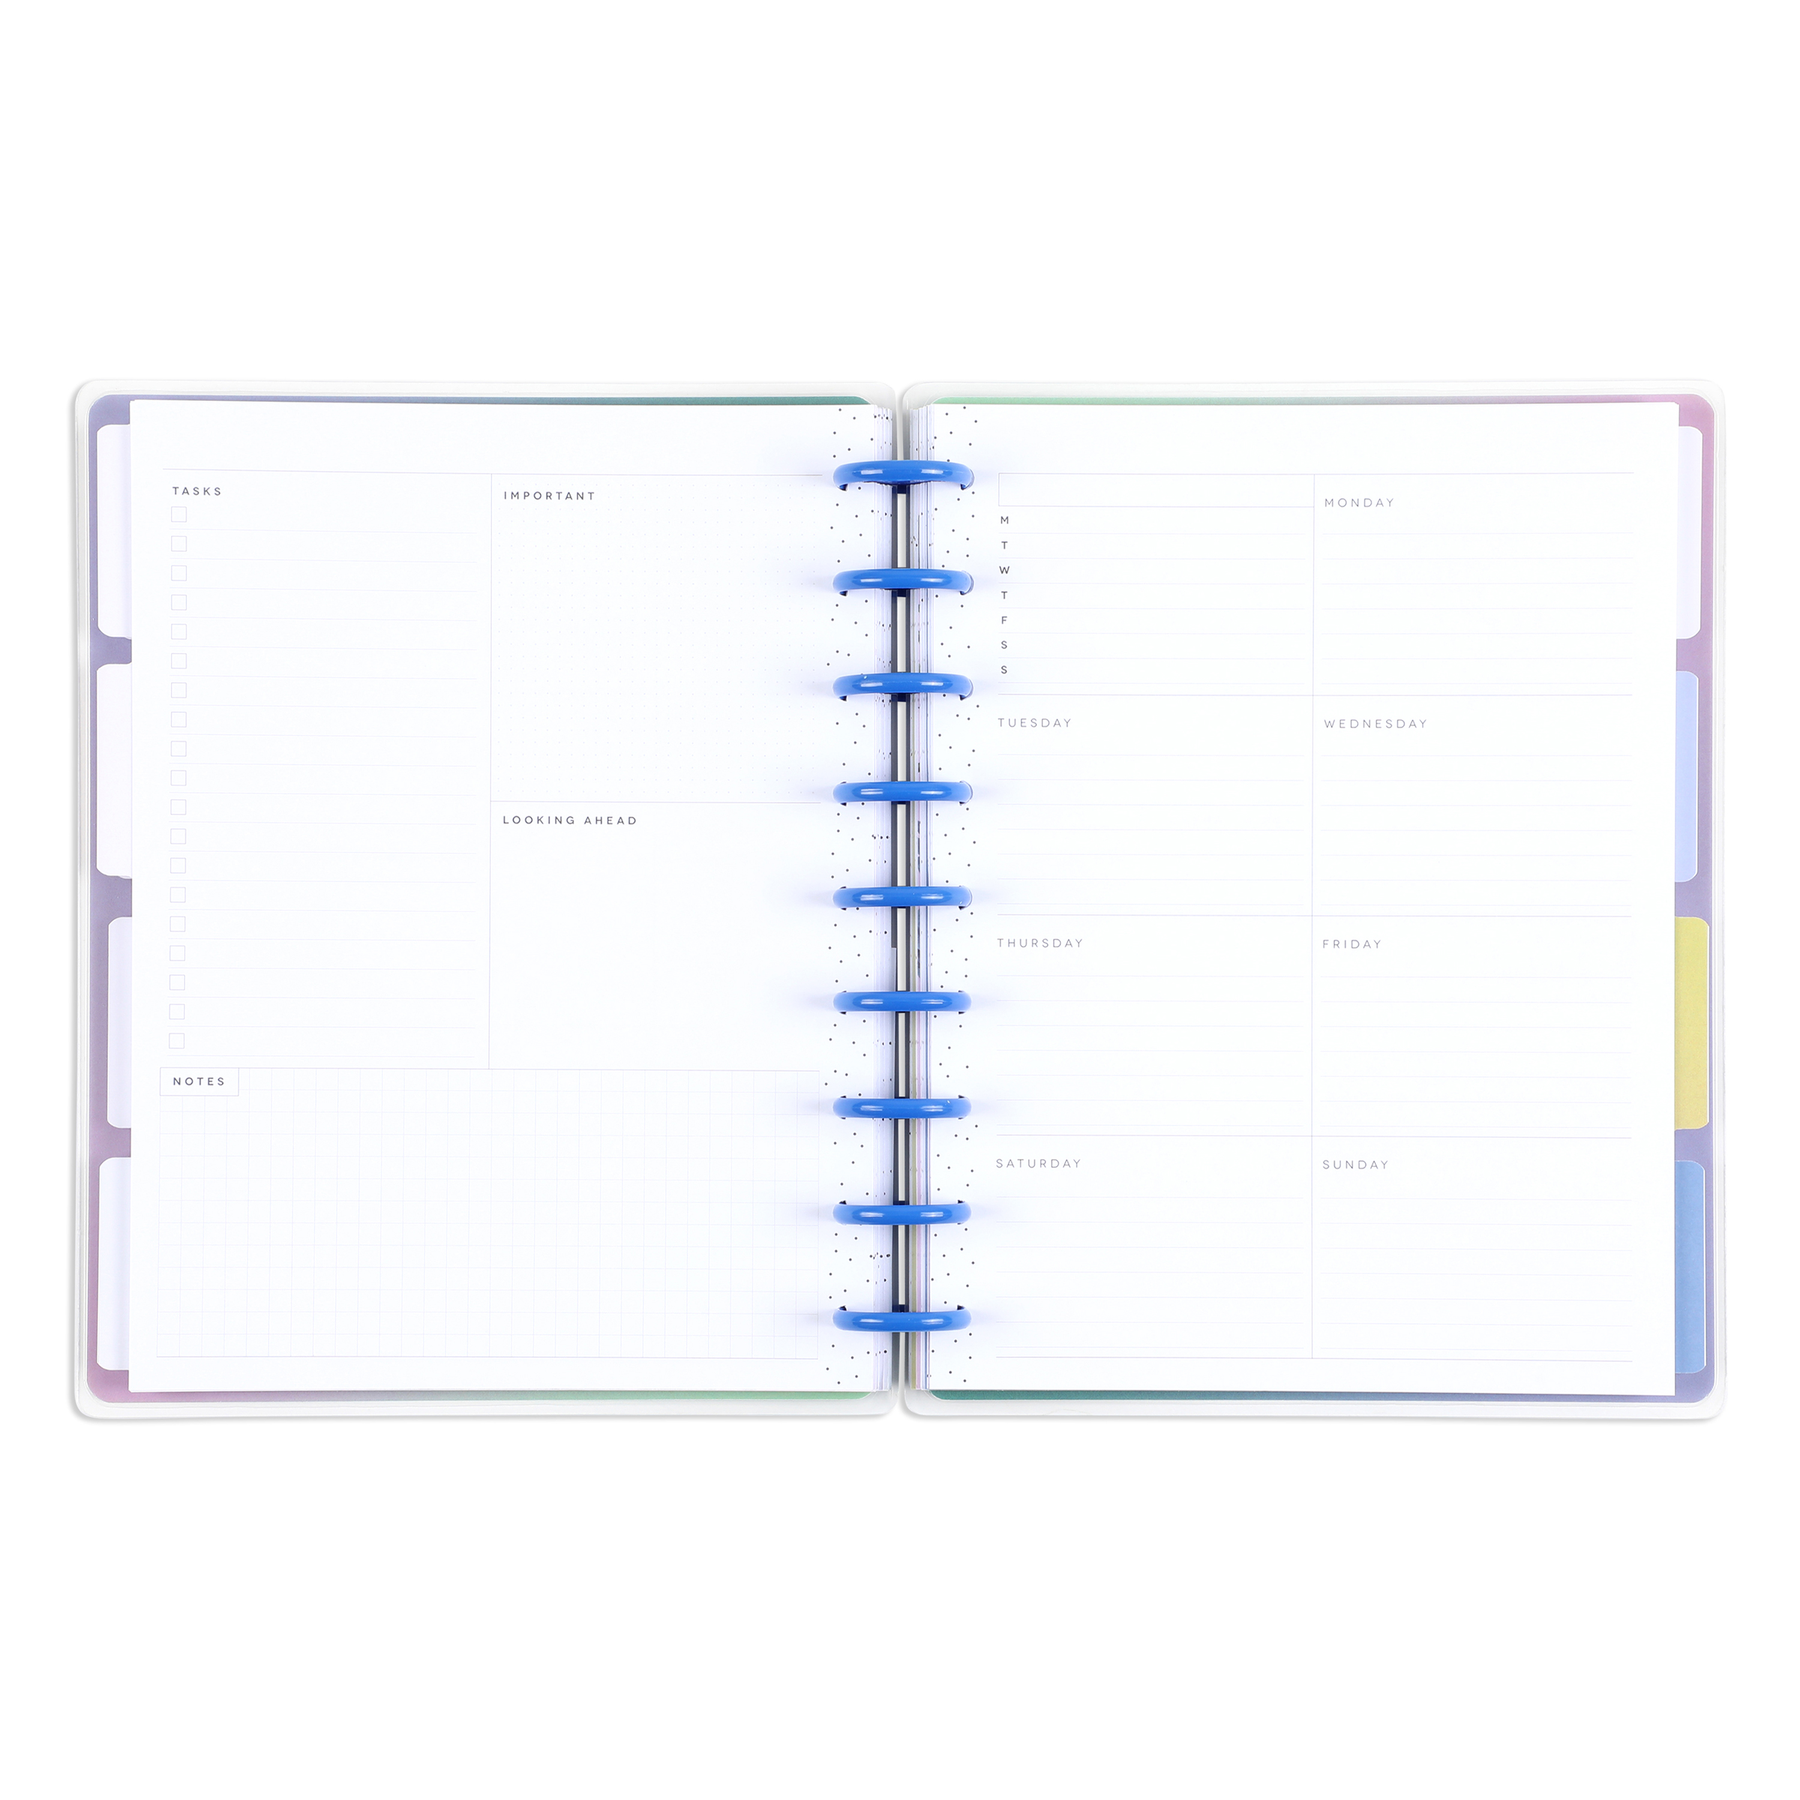 The Happy Planner™  Scrapbook Your Planner Dashboard!